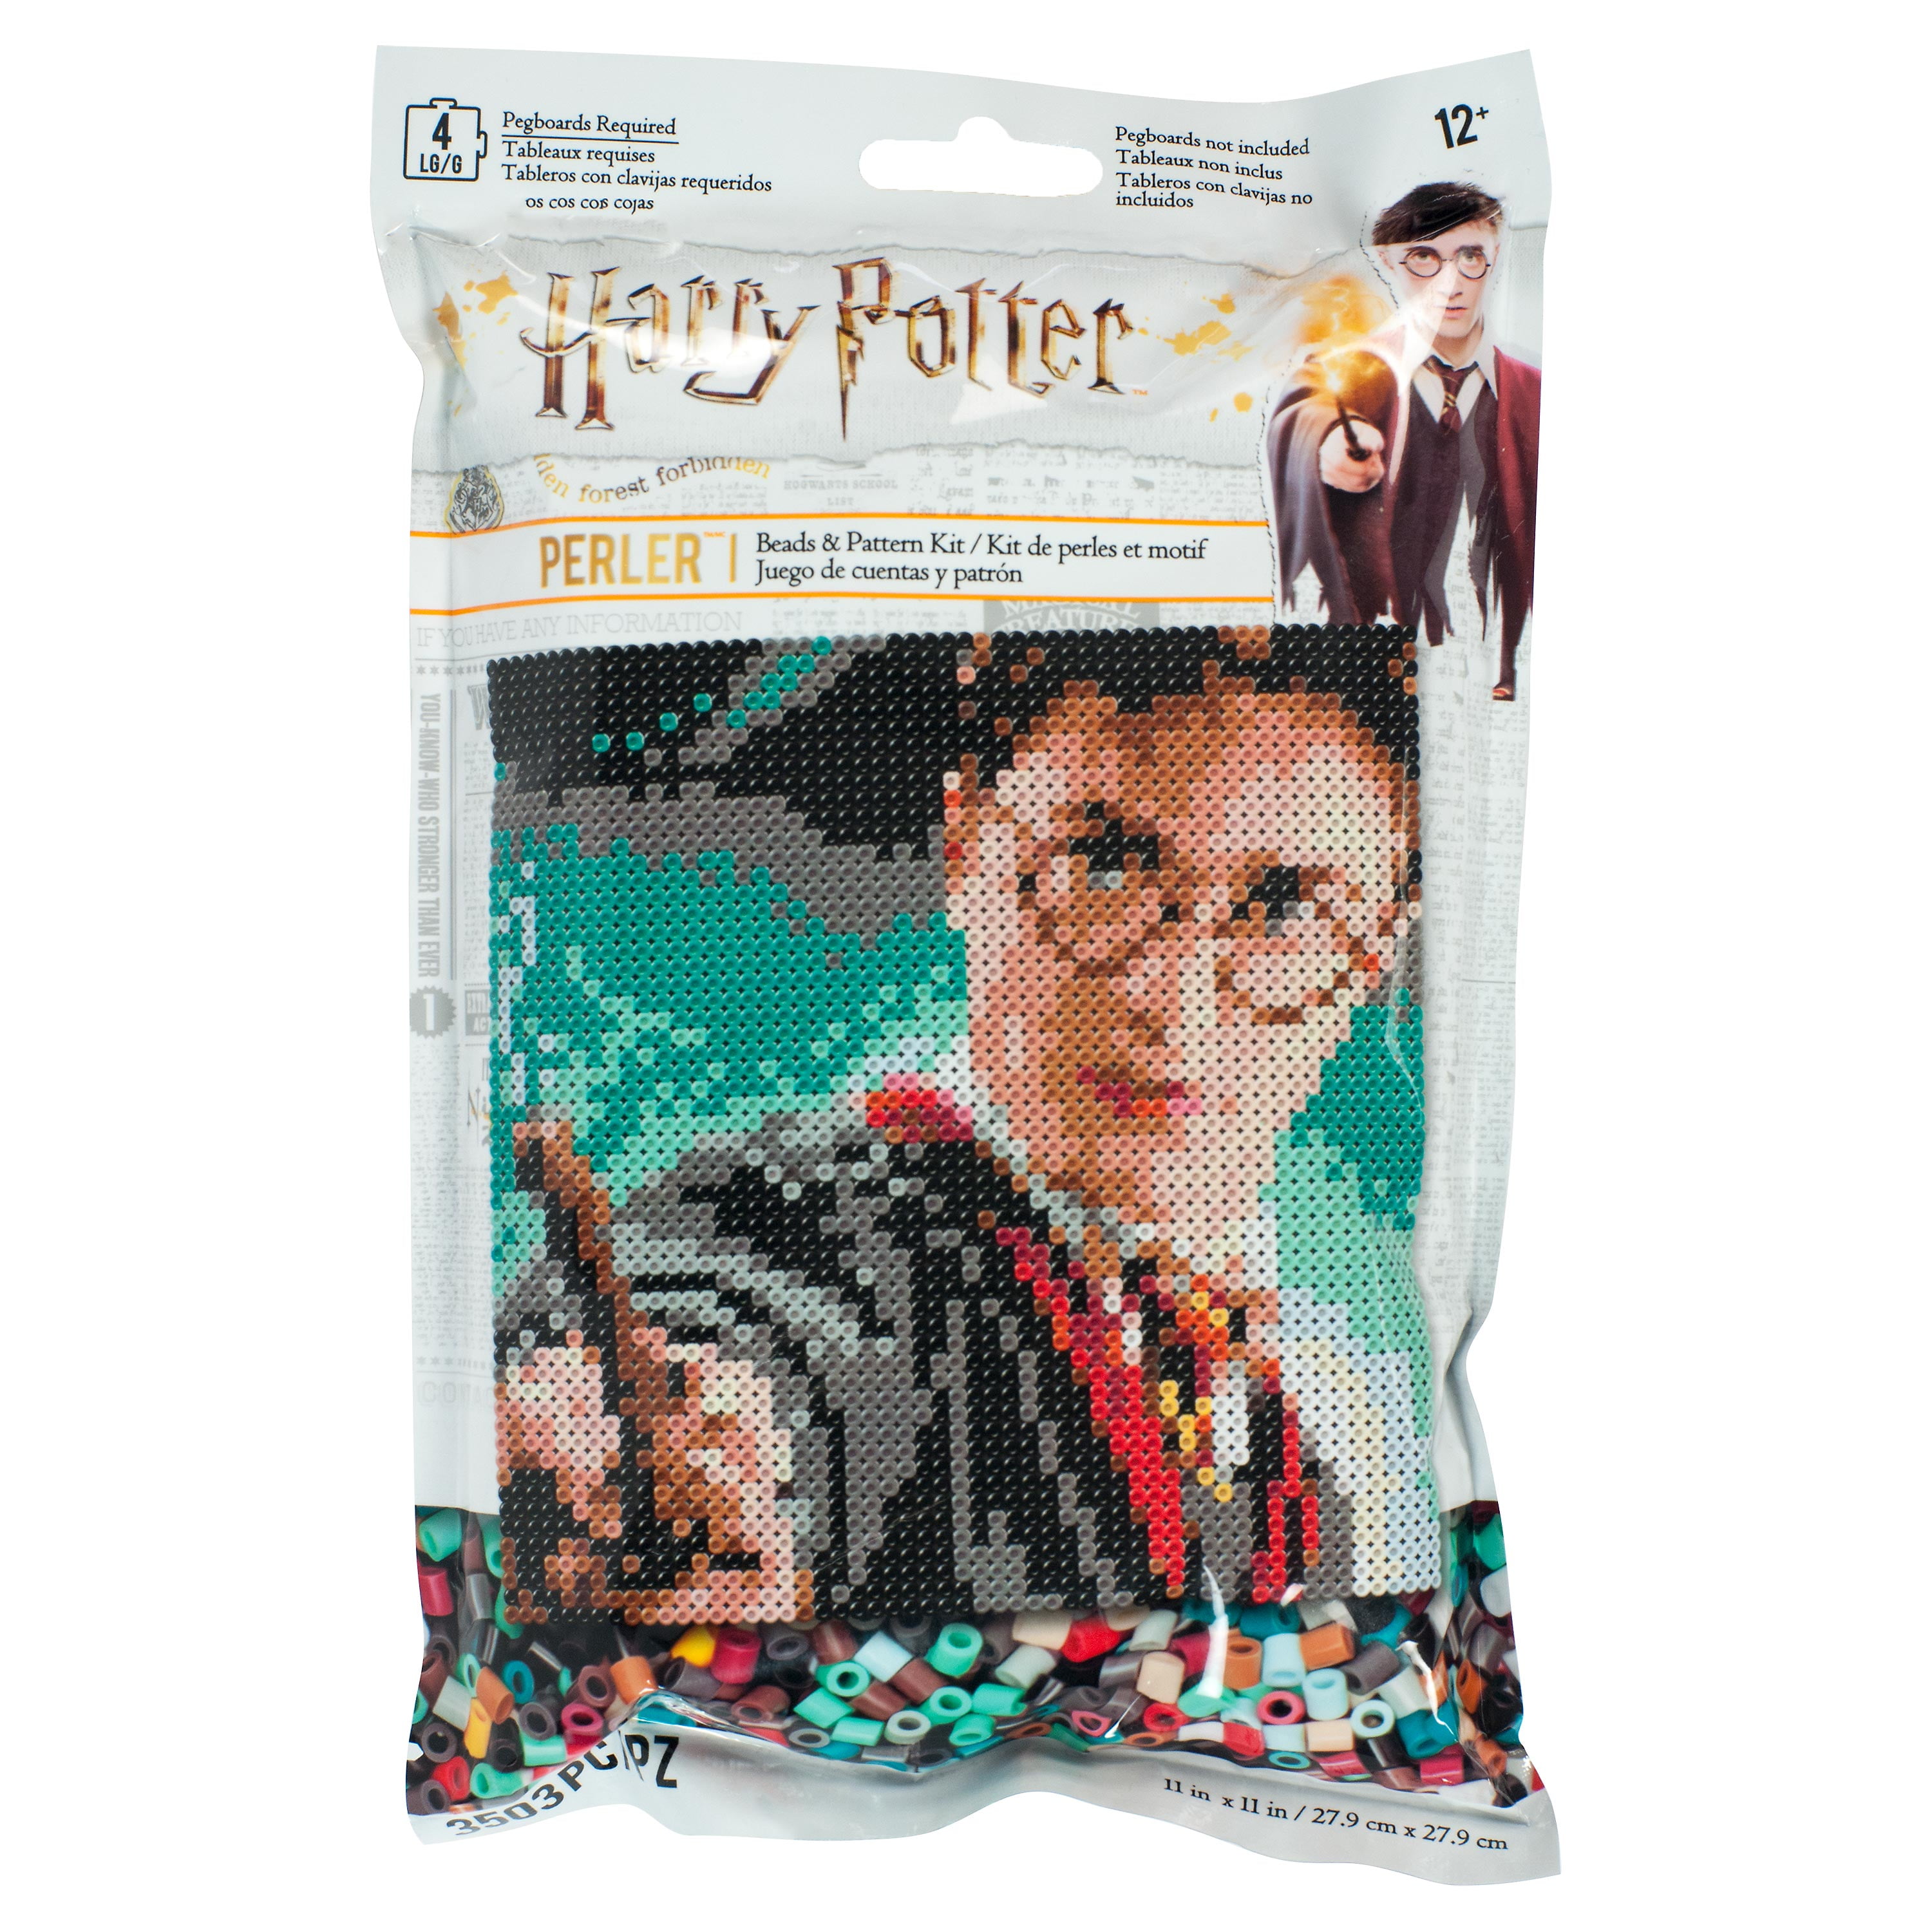 65 Harry Potter perler beads ideas  harry potter perler beads, perler beads,  perler